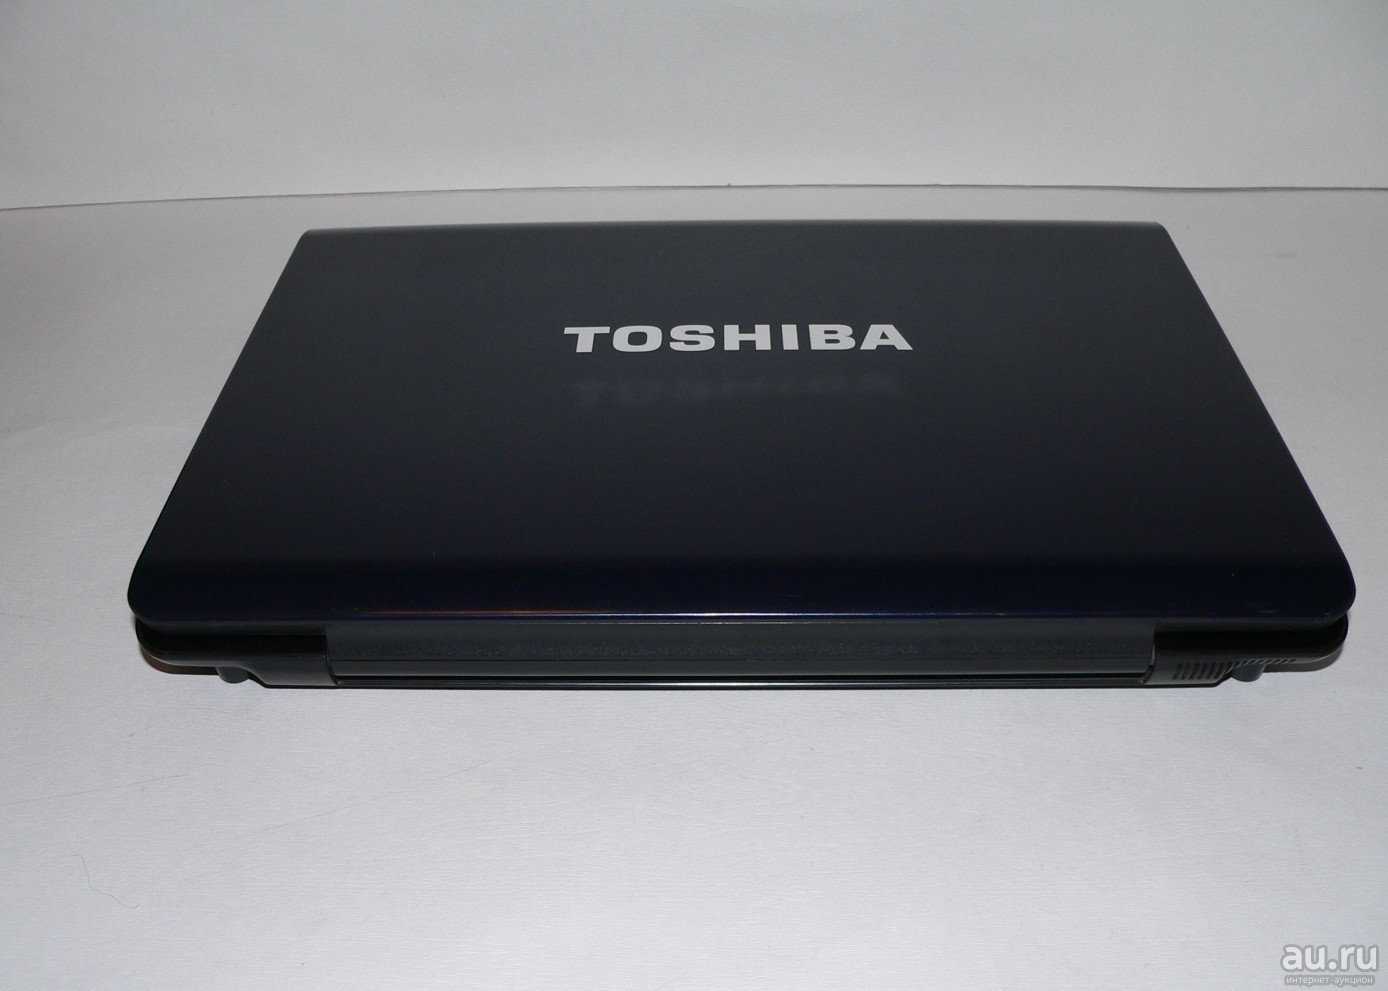 Ноутбук toshiba satellite l70-a-l2s — купить, цена и характеристики, отзывы